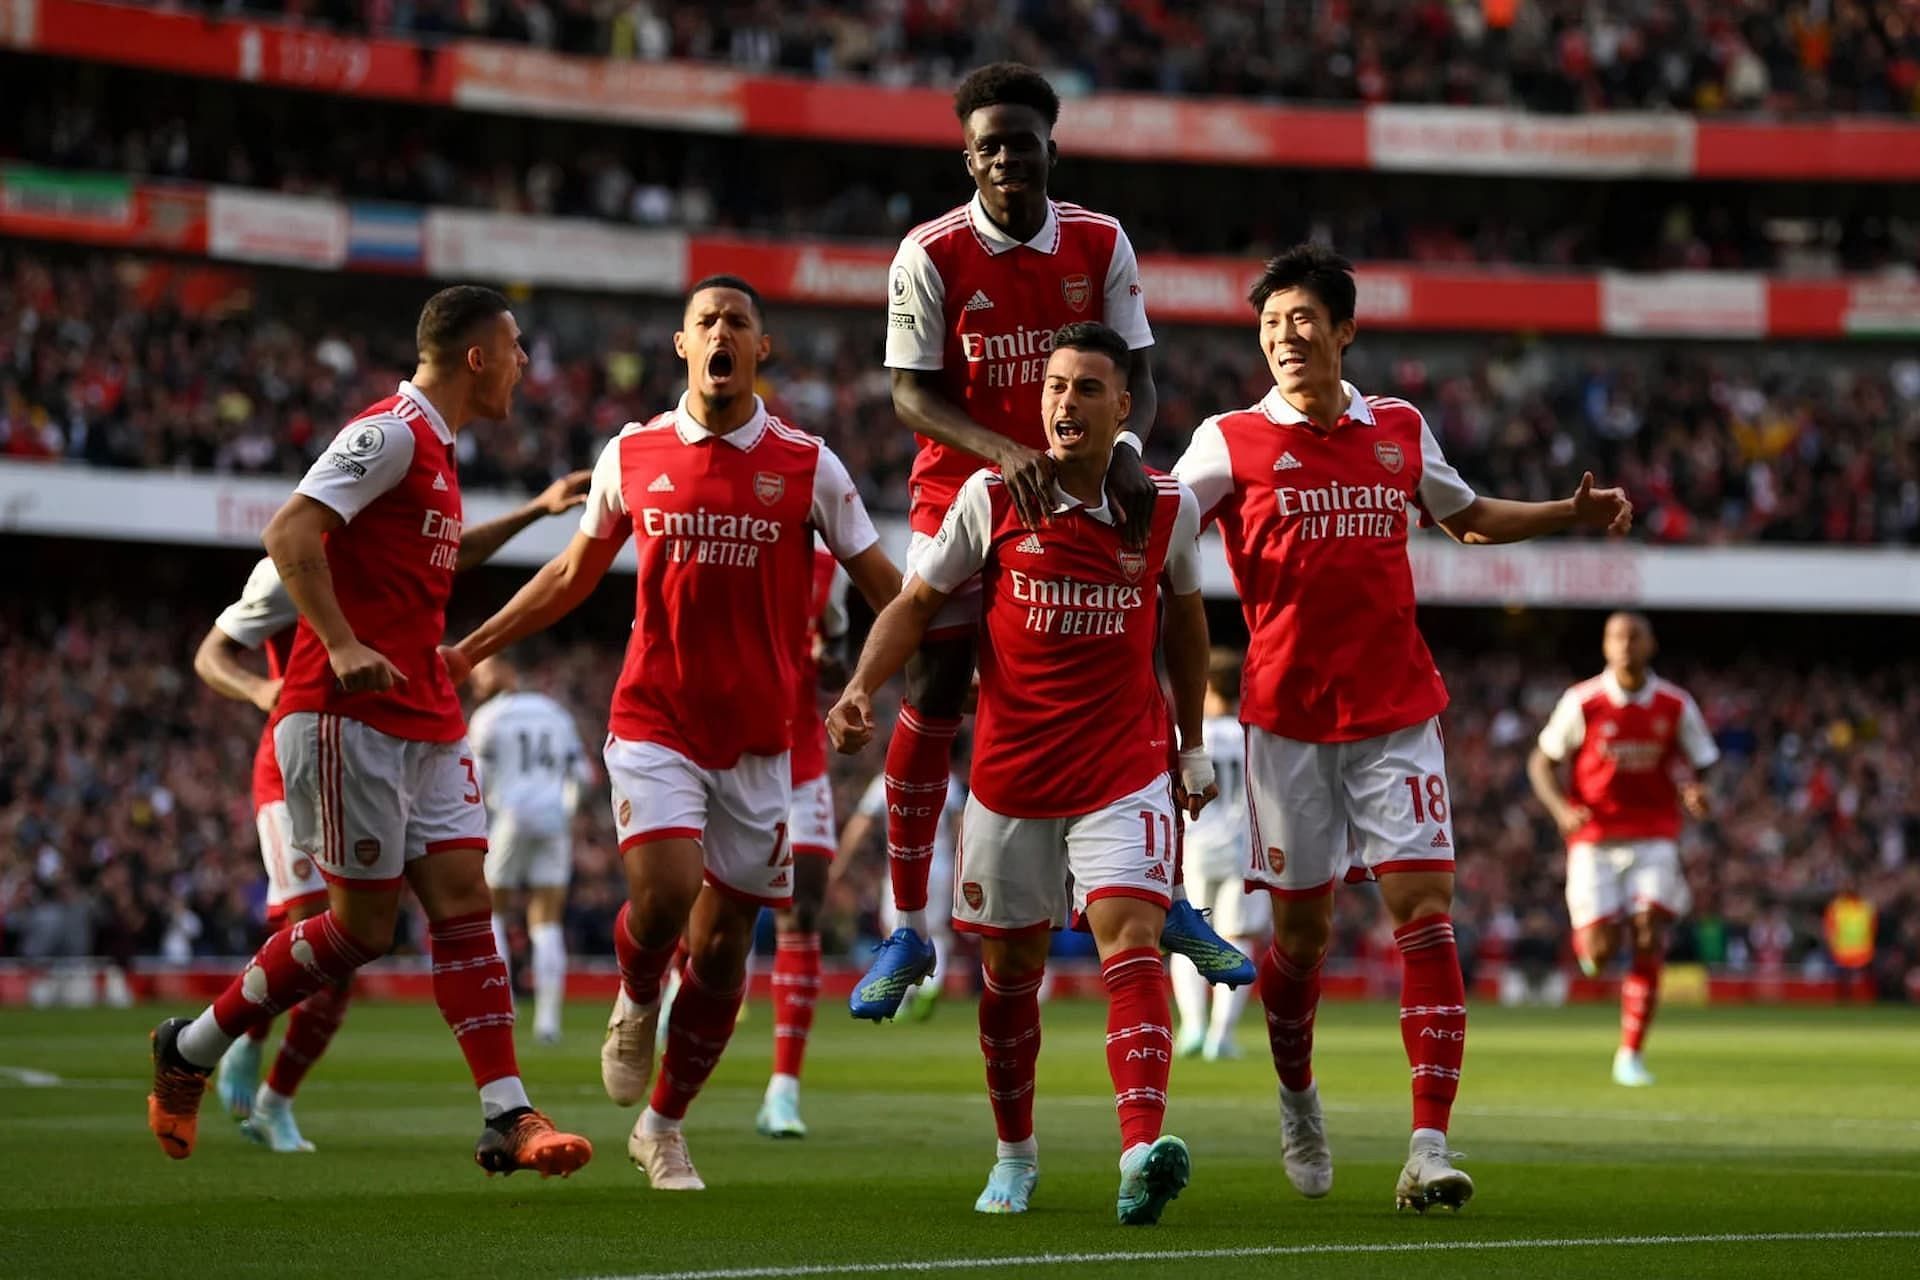 Arsenal celebrating a goal during the season (Image via Getty)